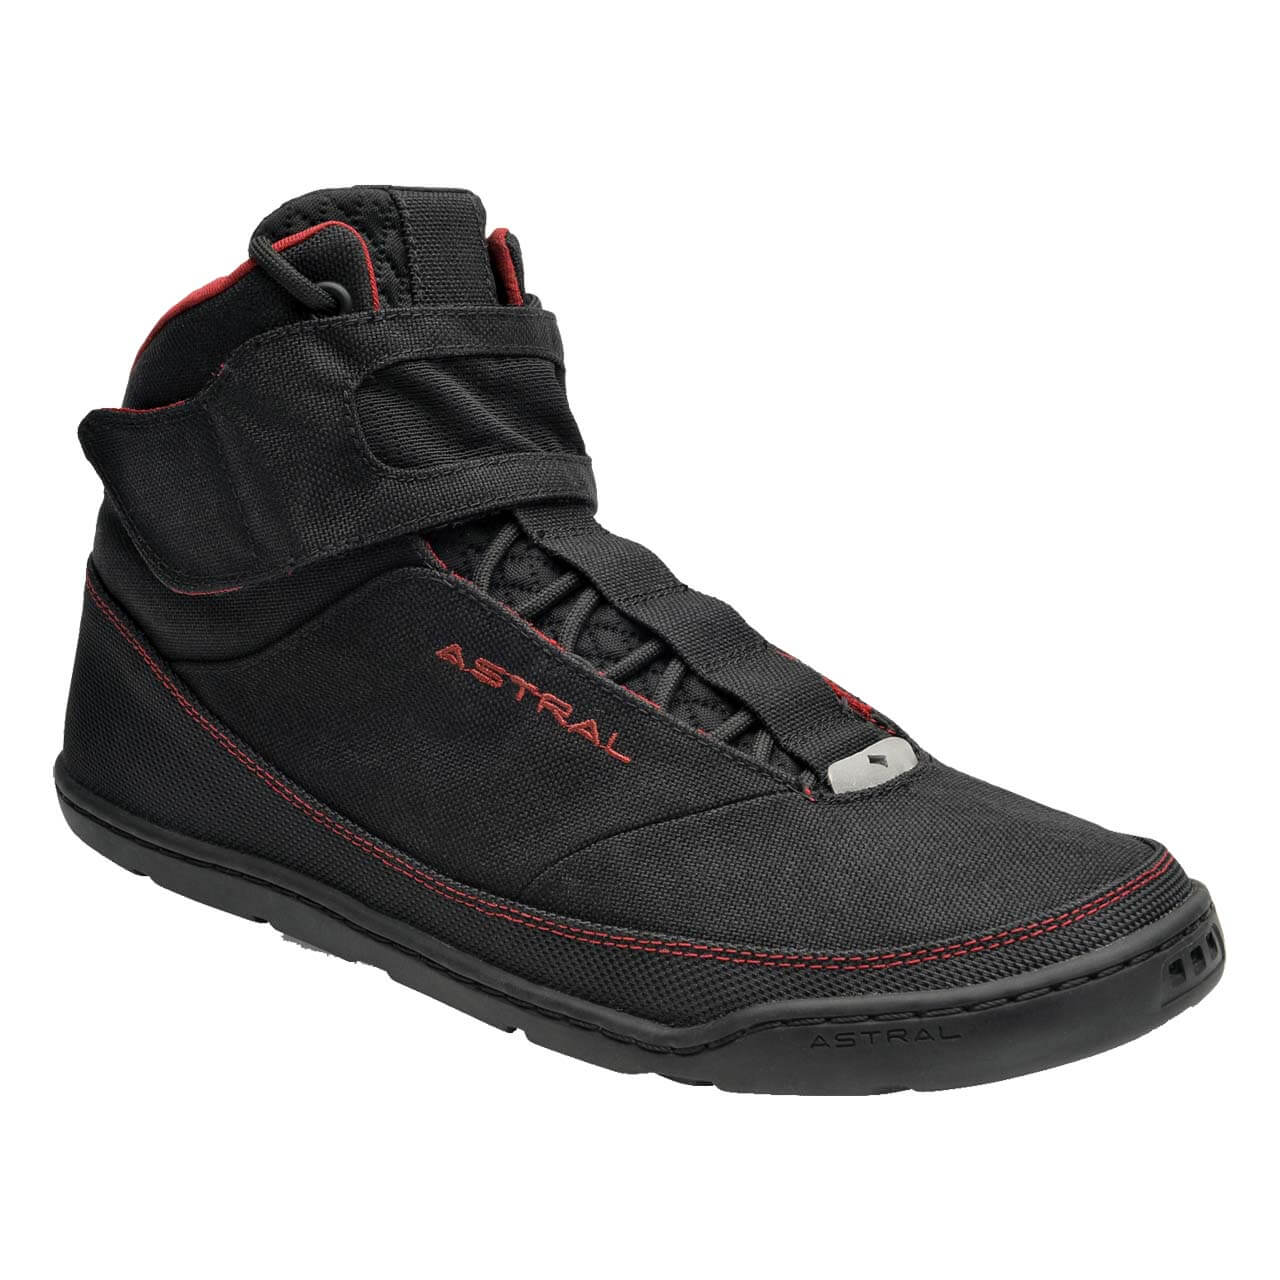 Astral Hiyak Kajak Boots - Black, US 12 / EU 46.6